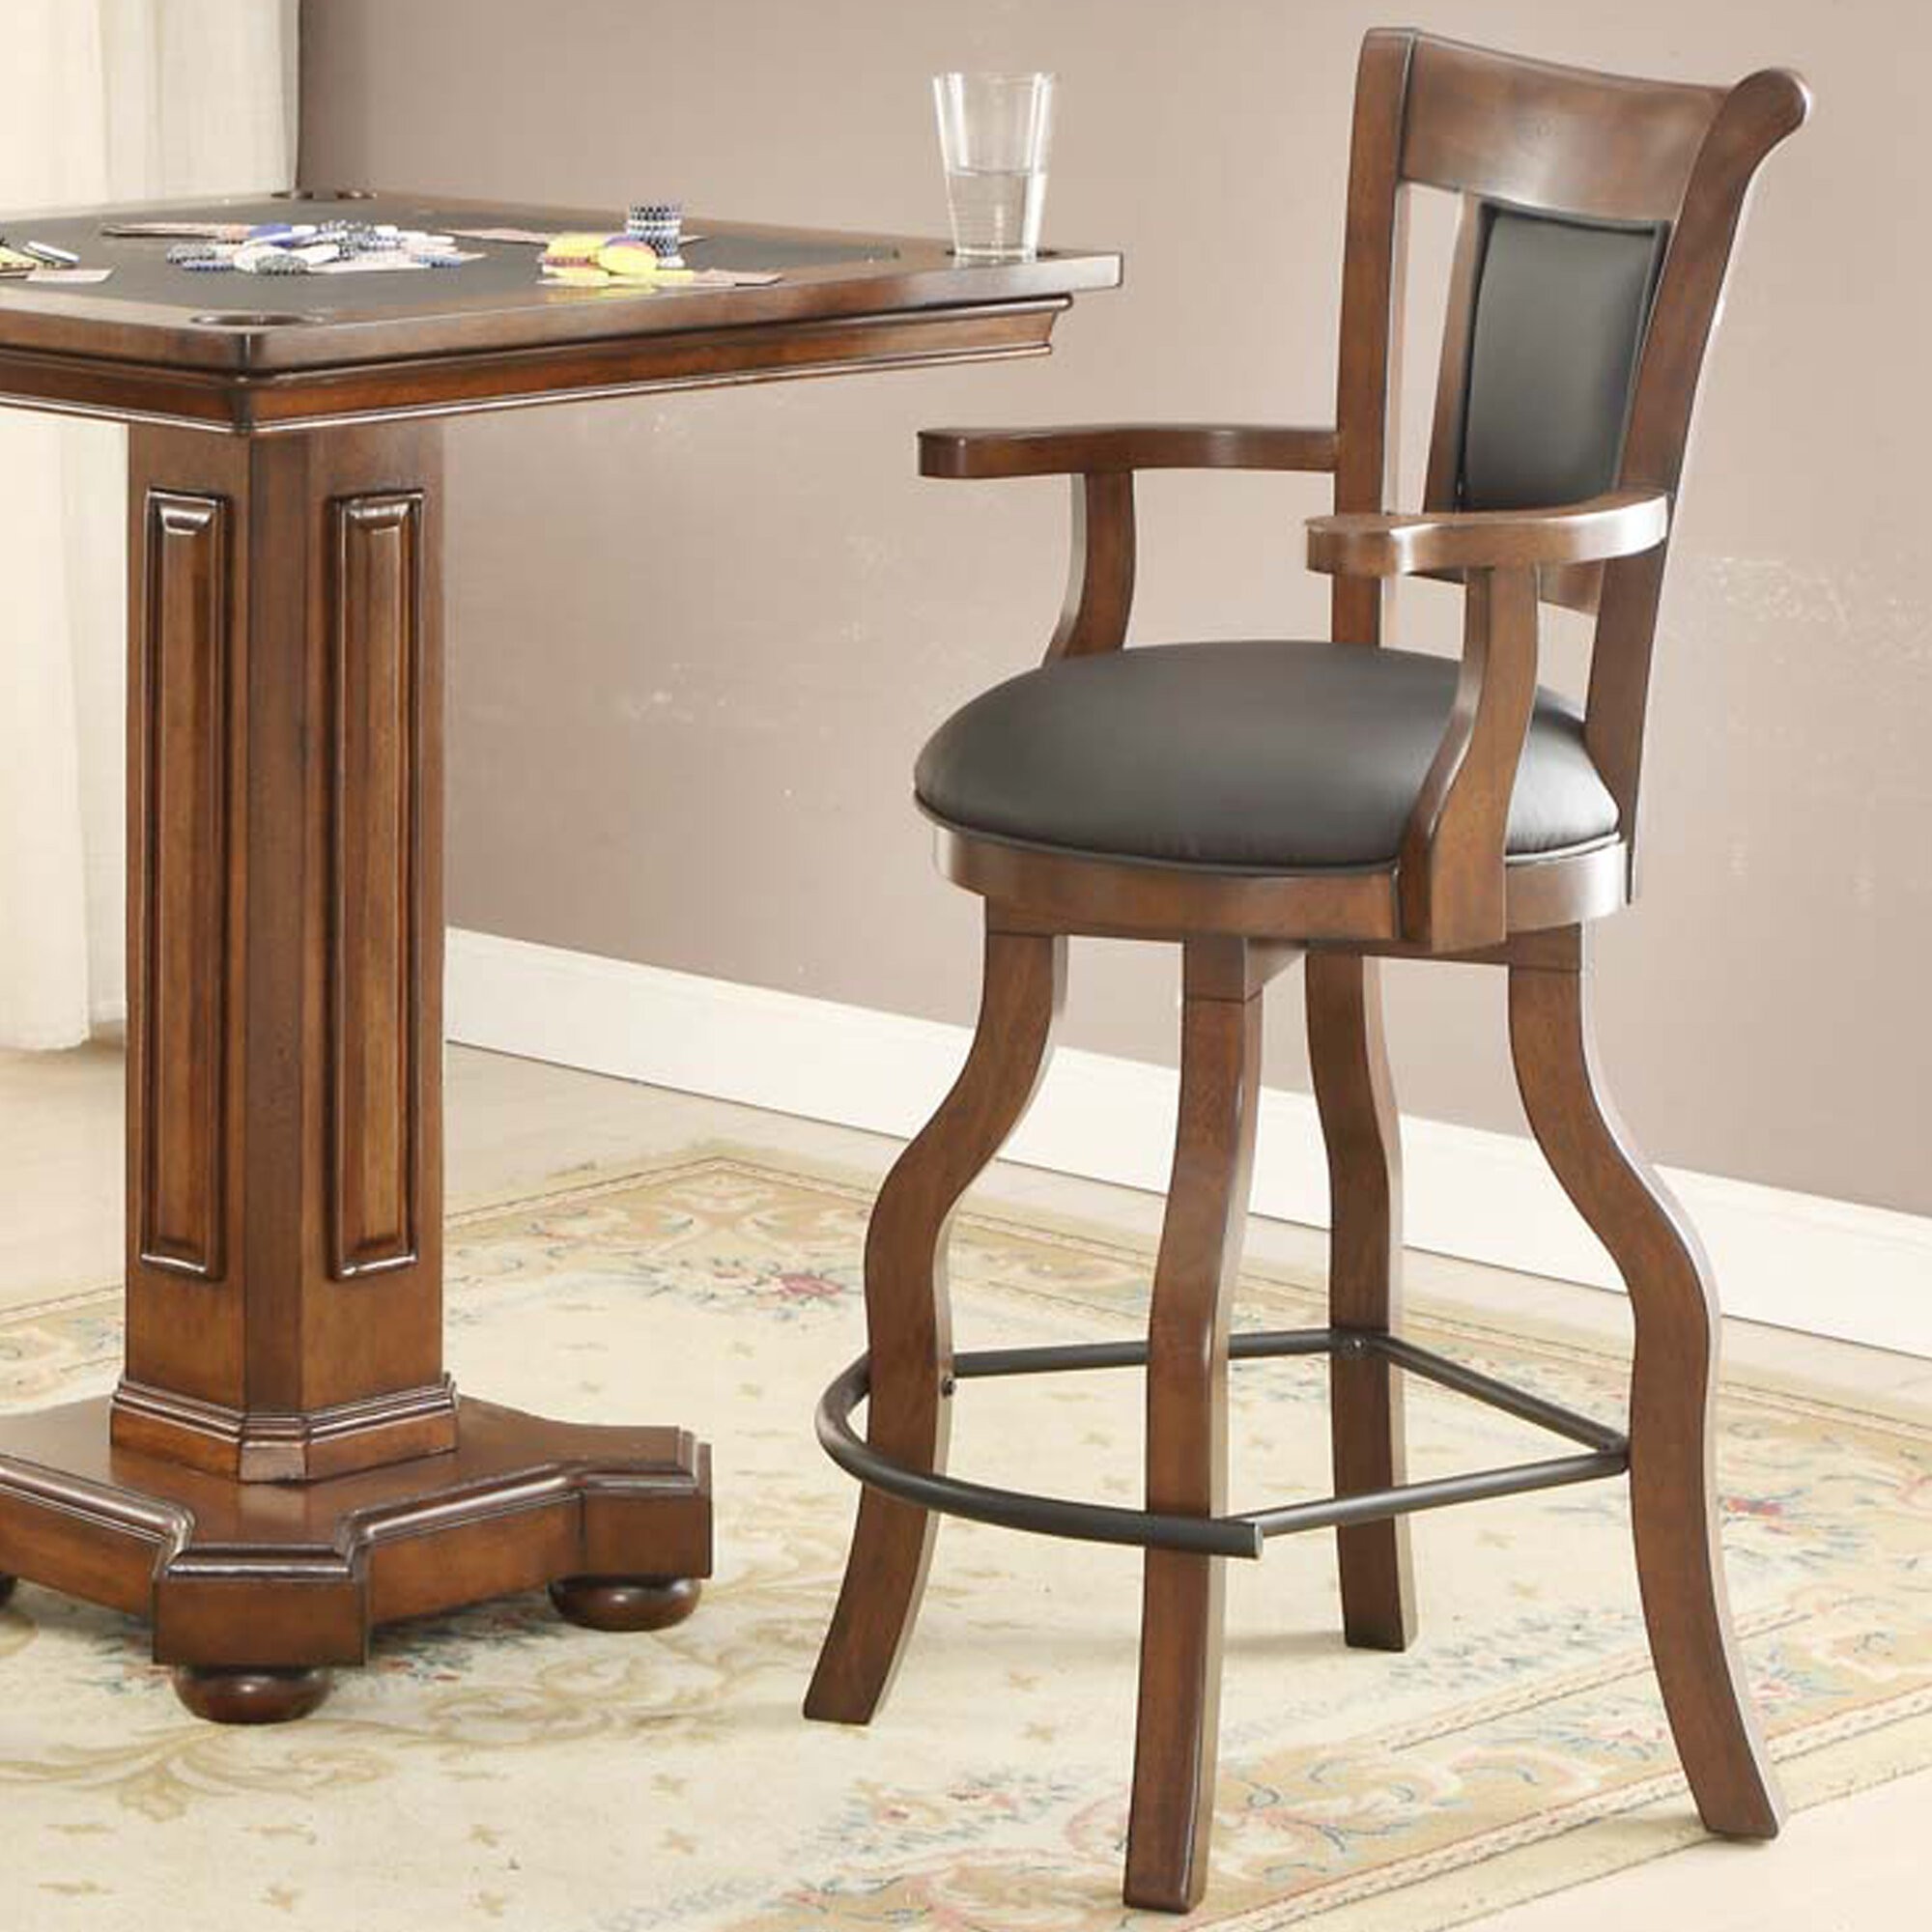 Eci furniture guinness 24 7 swivel bar stool